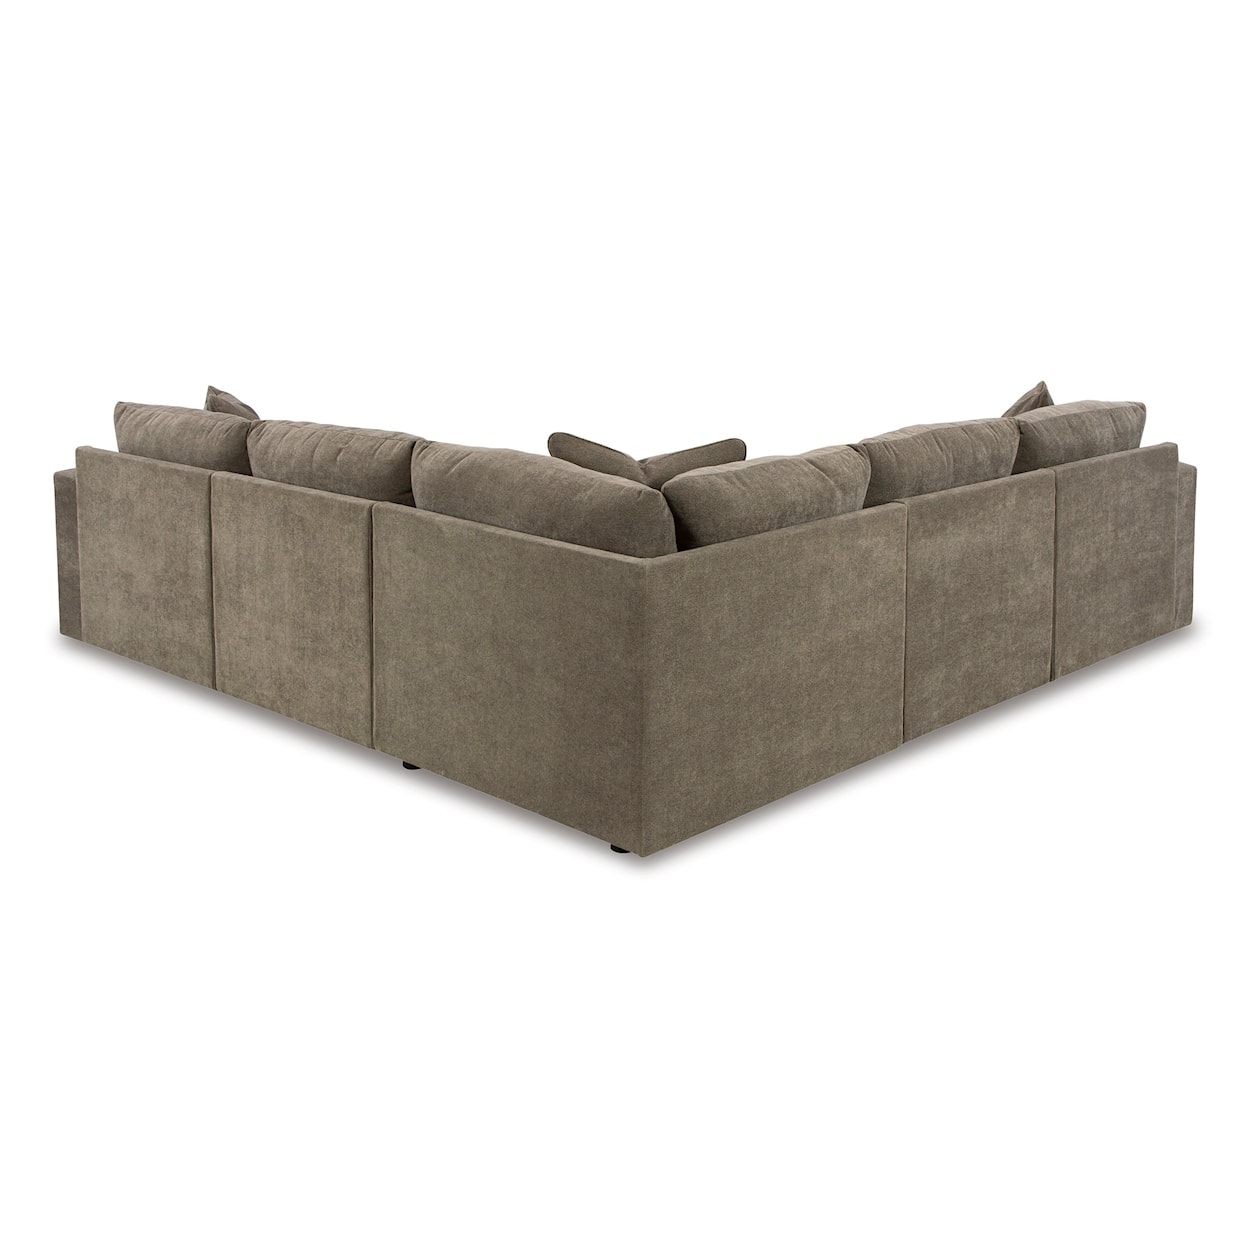 Ashley Furniture Benchcraft Raeanna Sectional Sofa